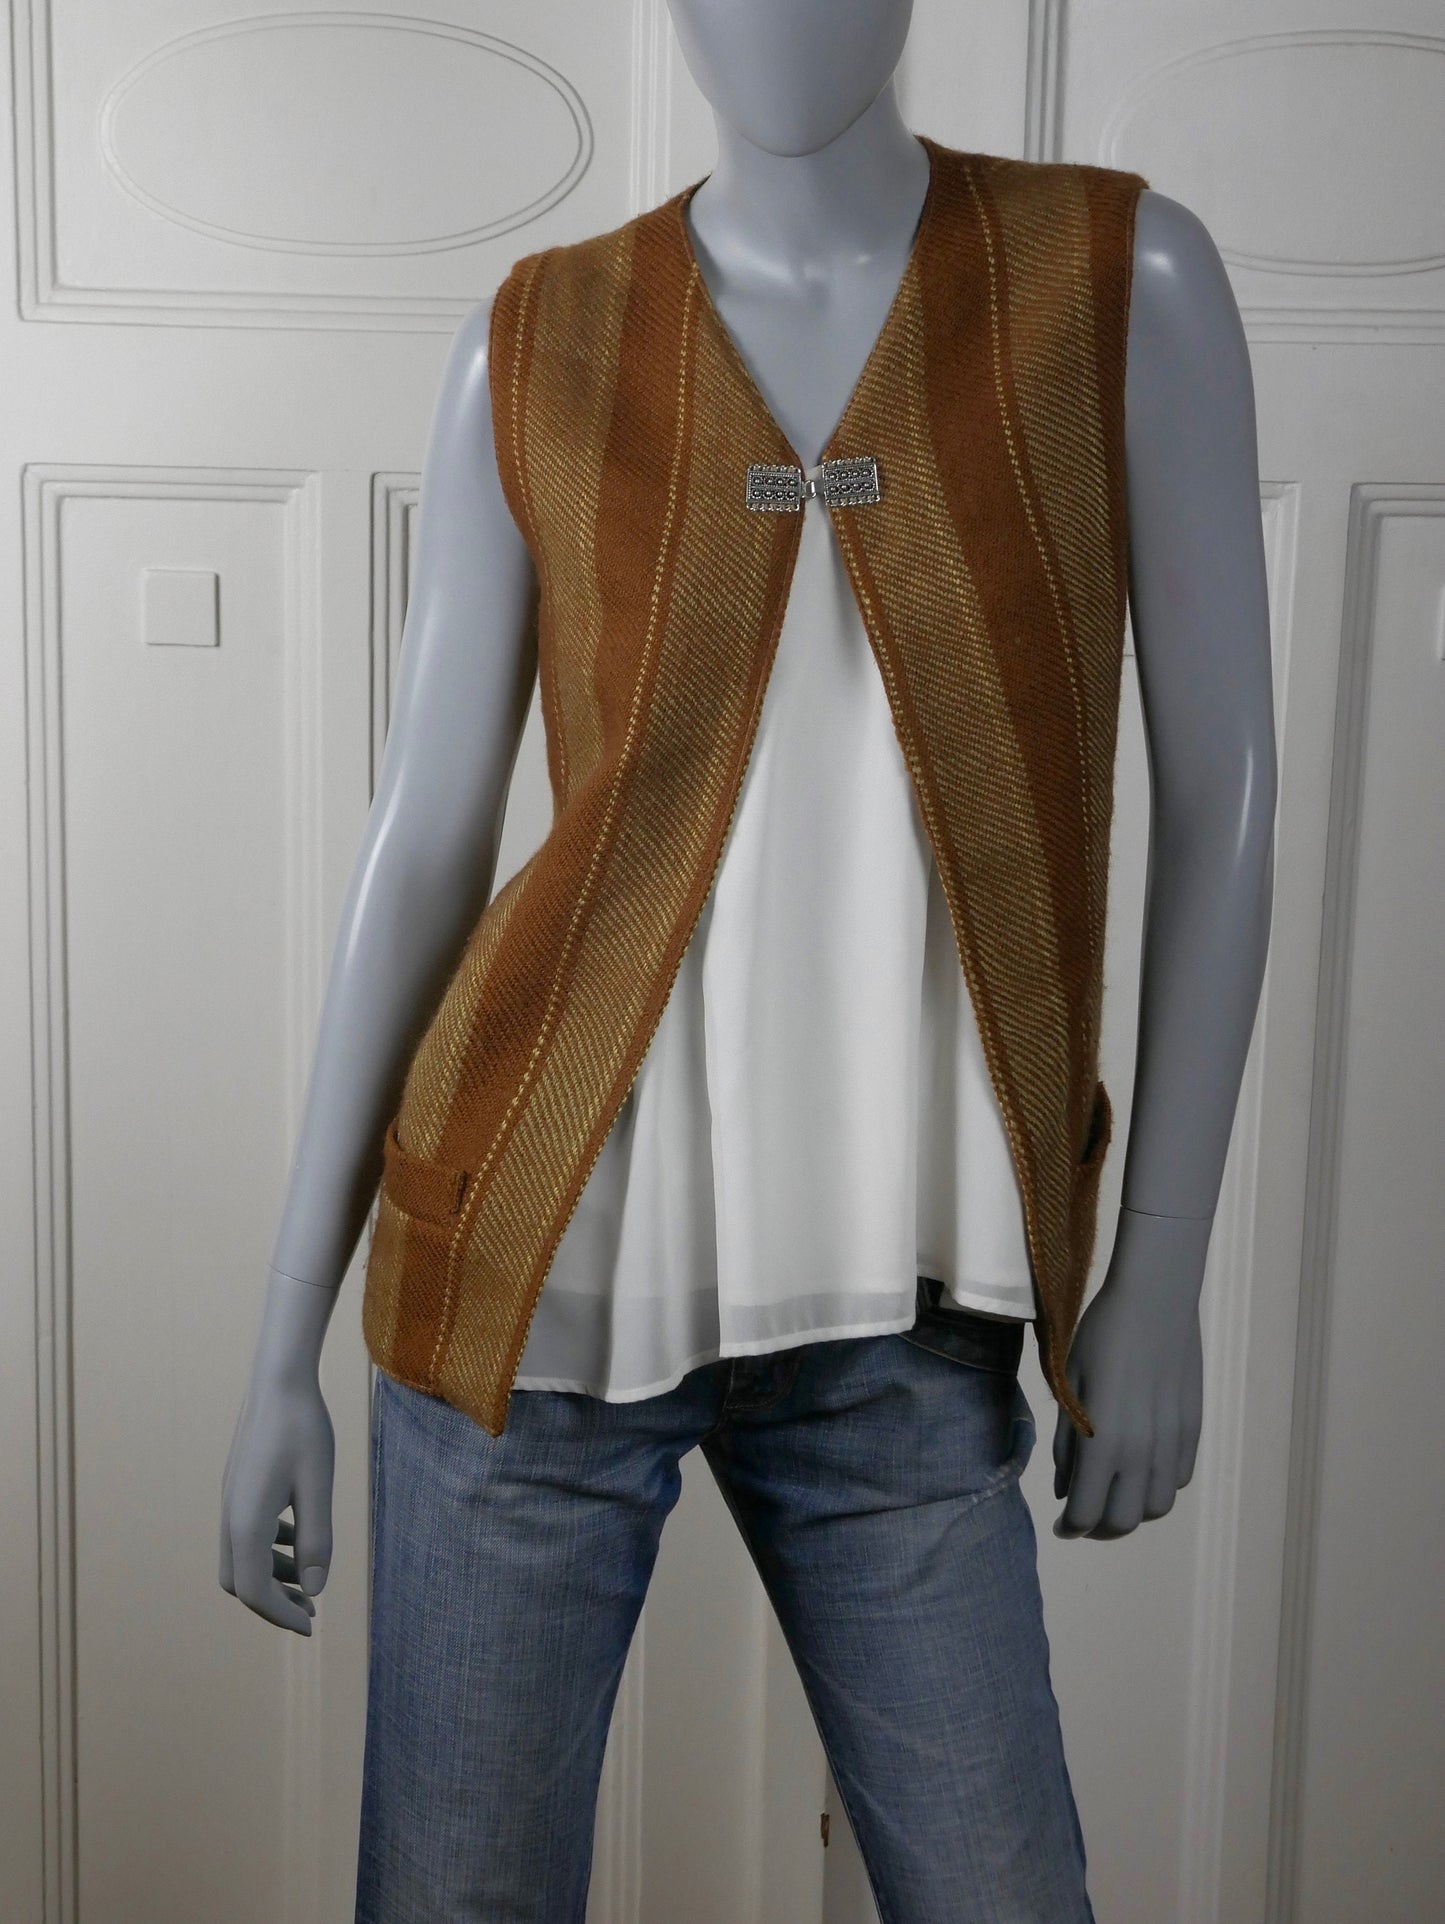 Women's 1970s Vintage Long Striped Vest | Light Caramel Brown & Golden Beige Tweed Wool  | Large